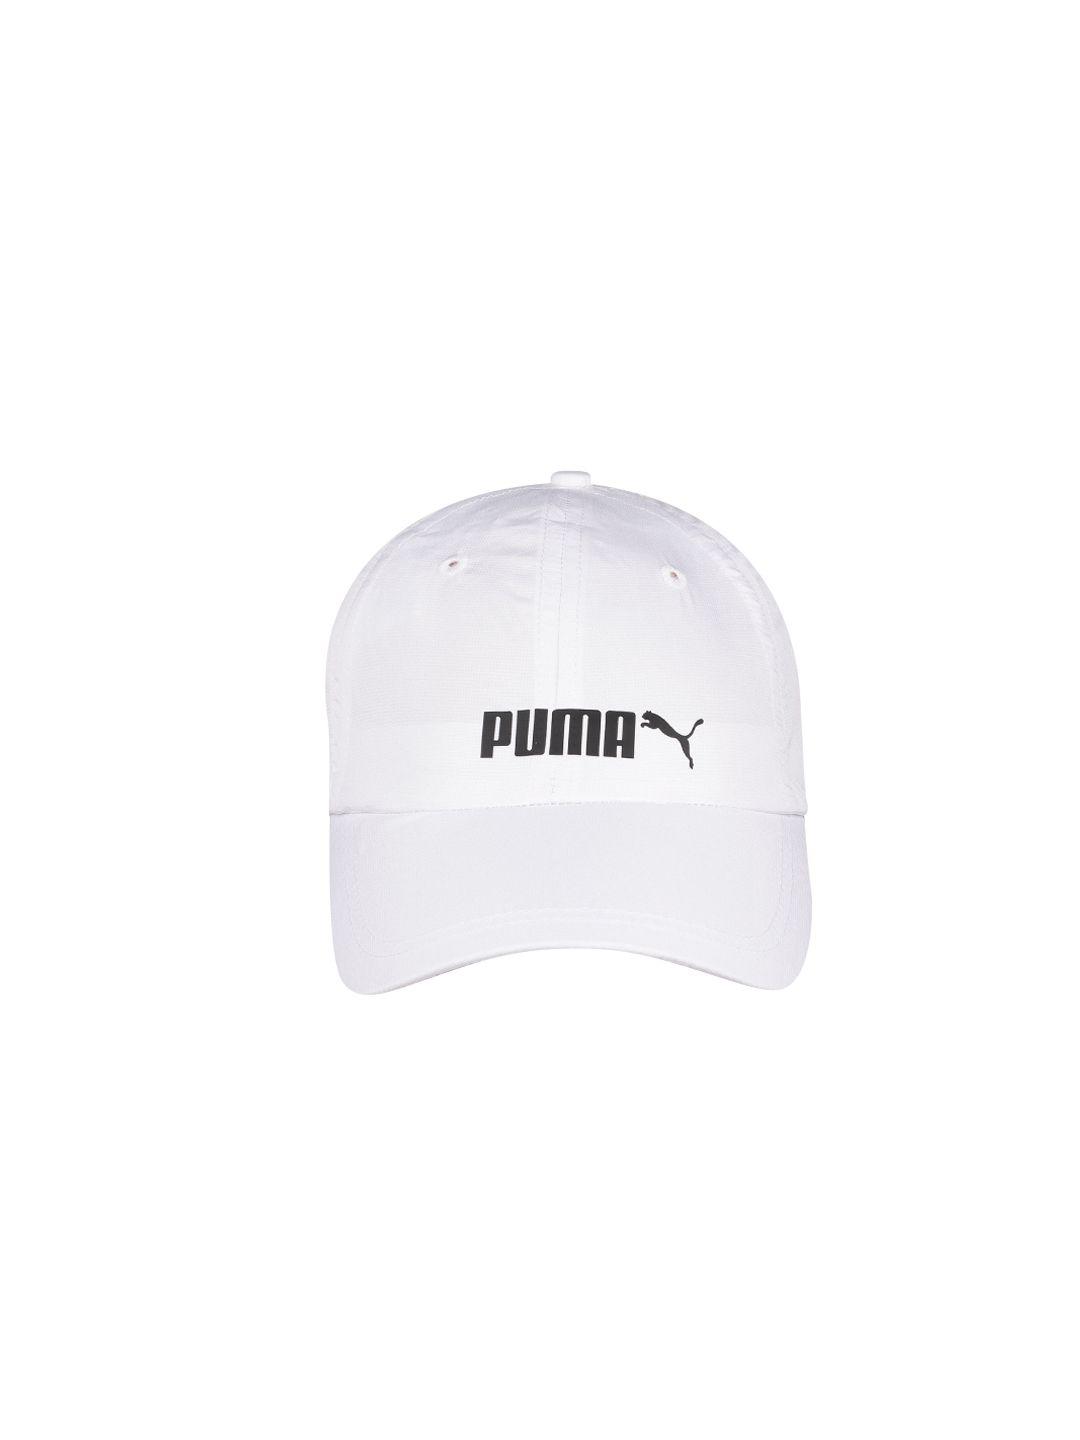 puma men performance printed baseball cap